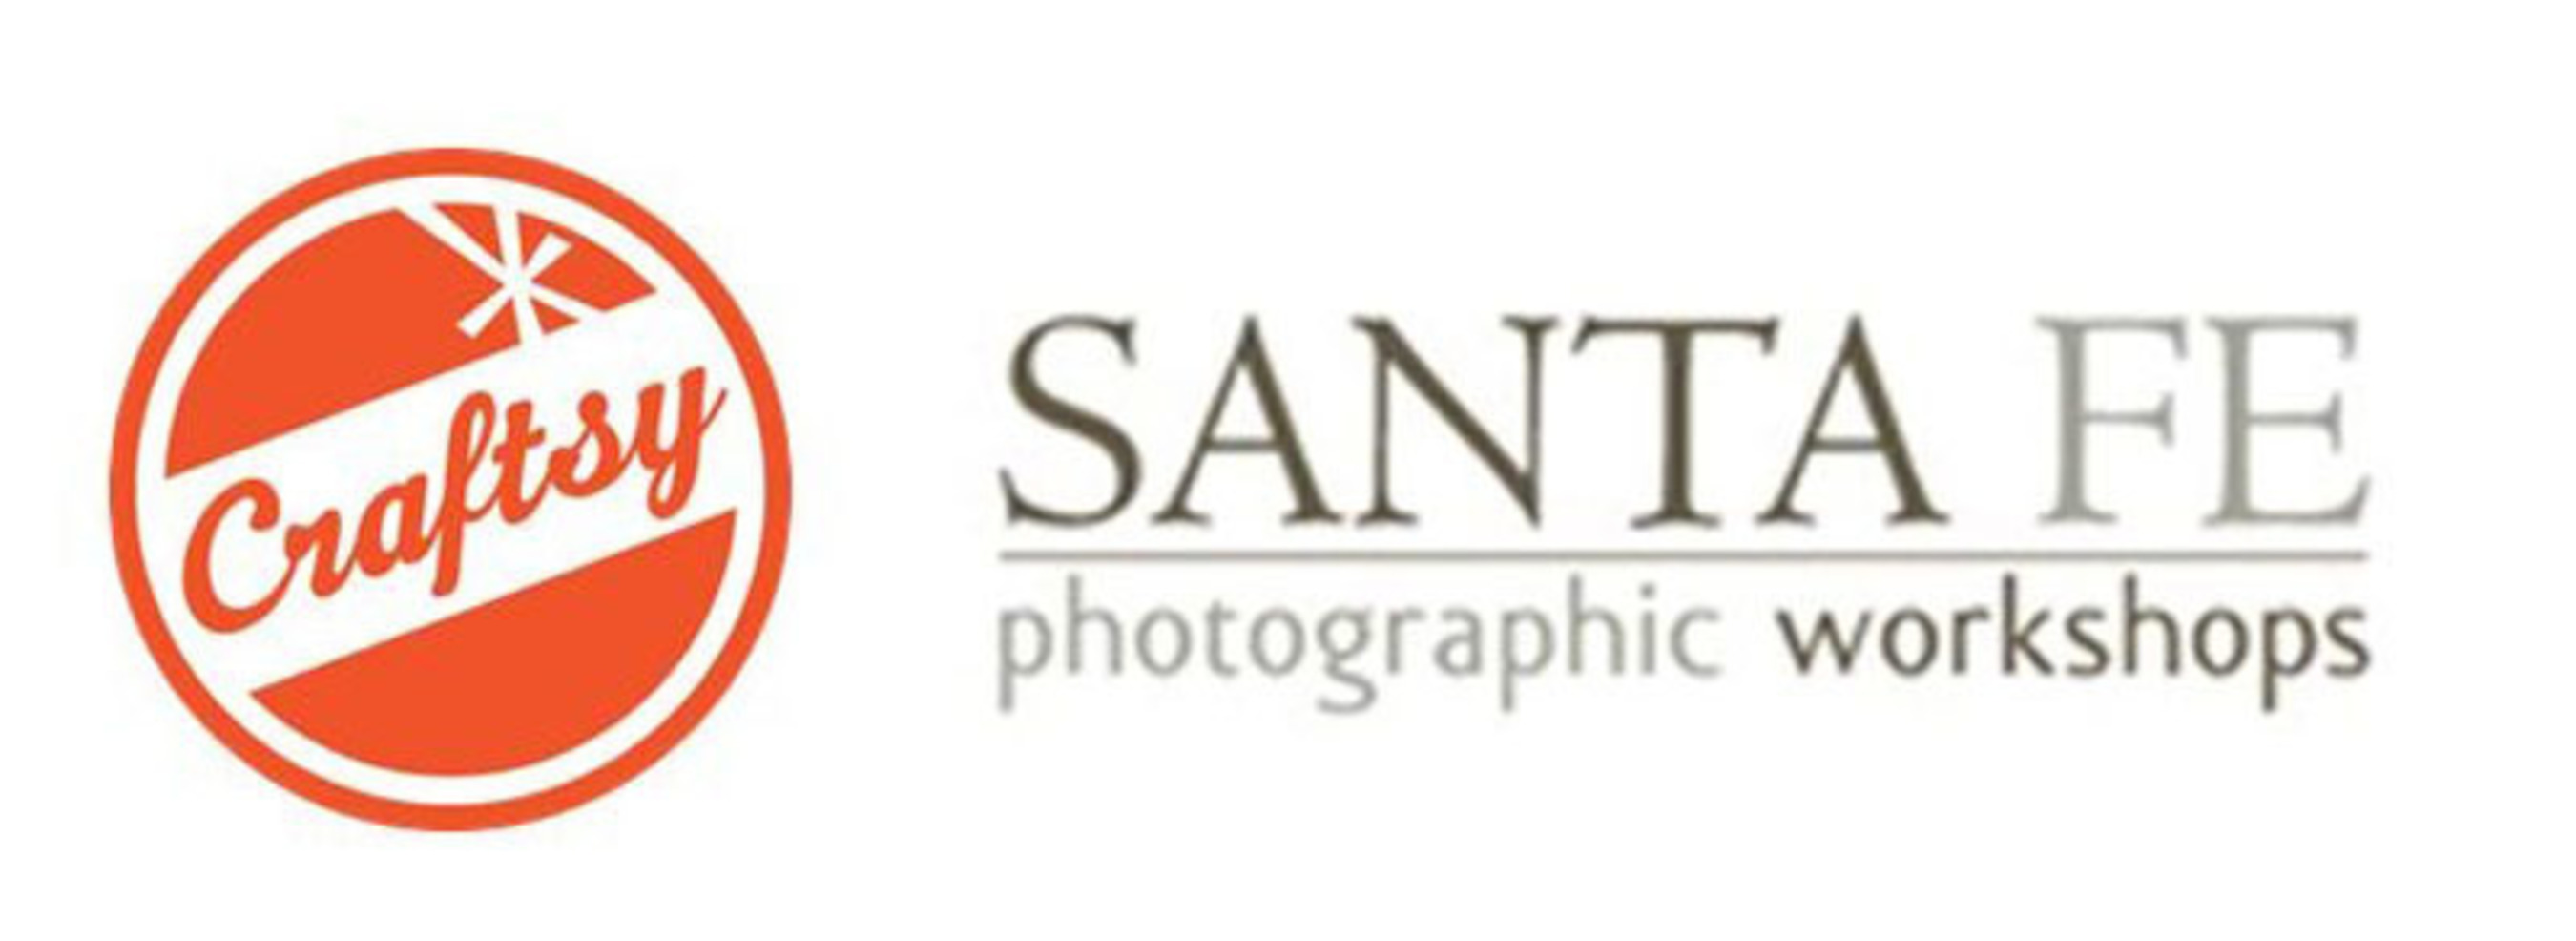 Craftsy and Santa Fe Photographic Workshops (PRNewsFoto/Craftsy)